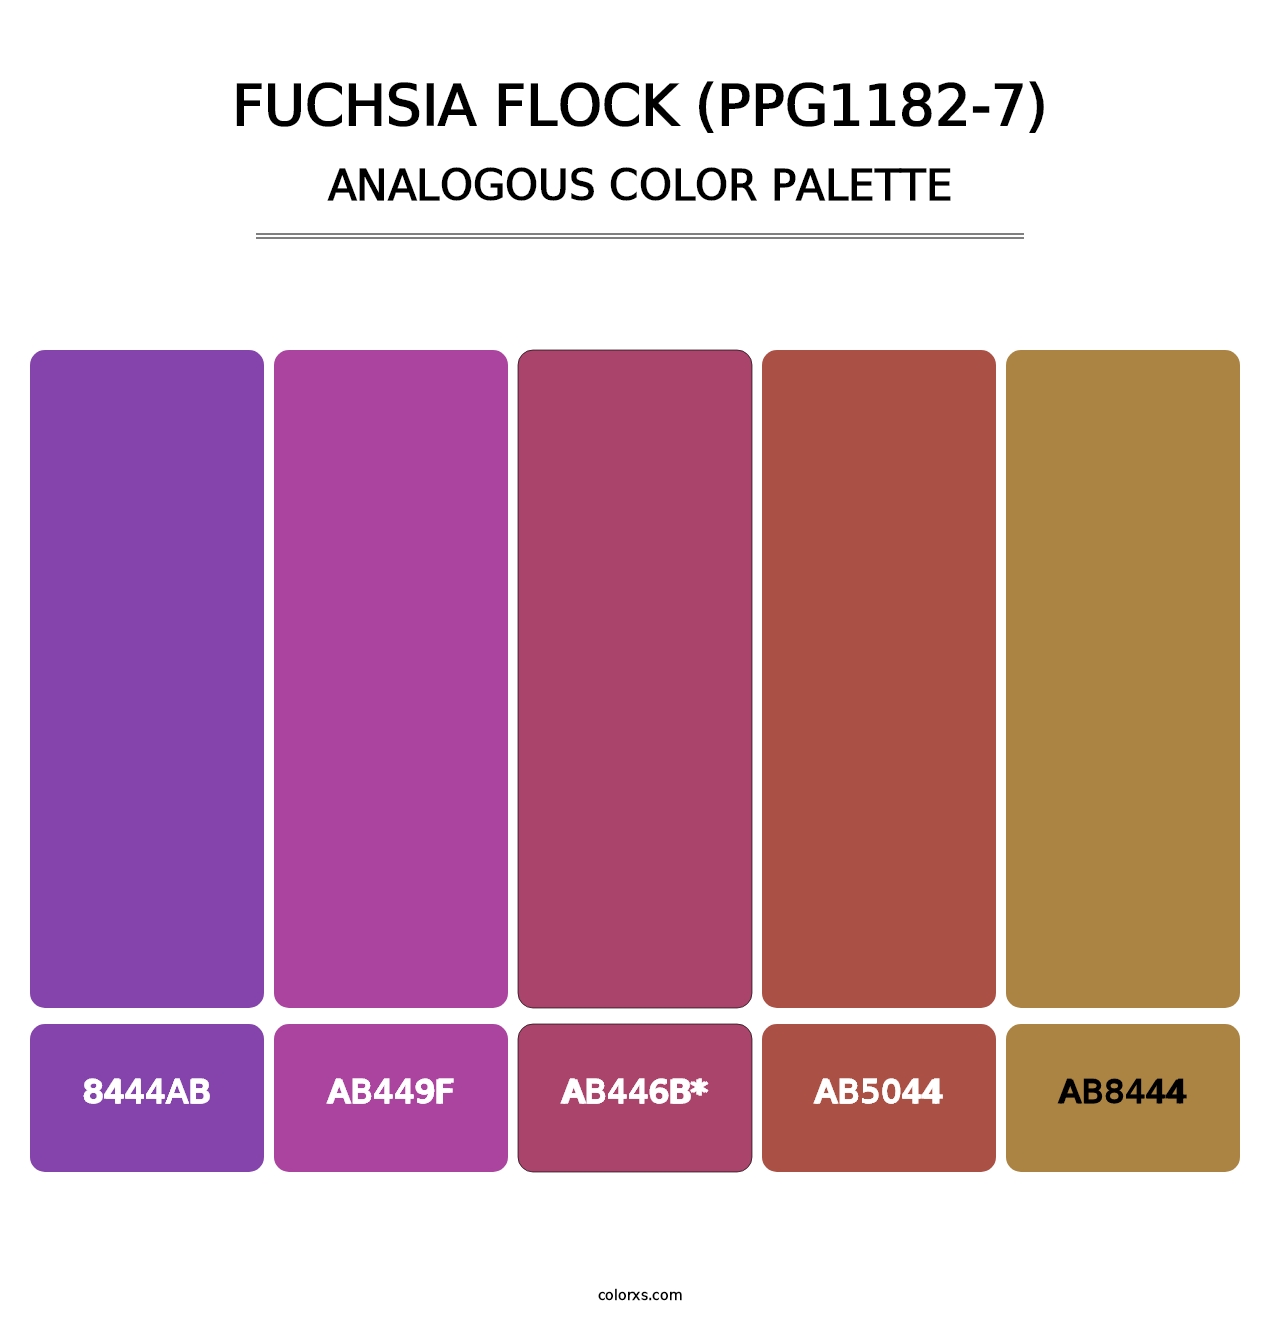 Fuchsia Flock (PPG1182-7) - Analogous Color Palette